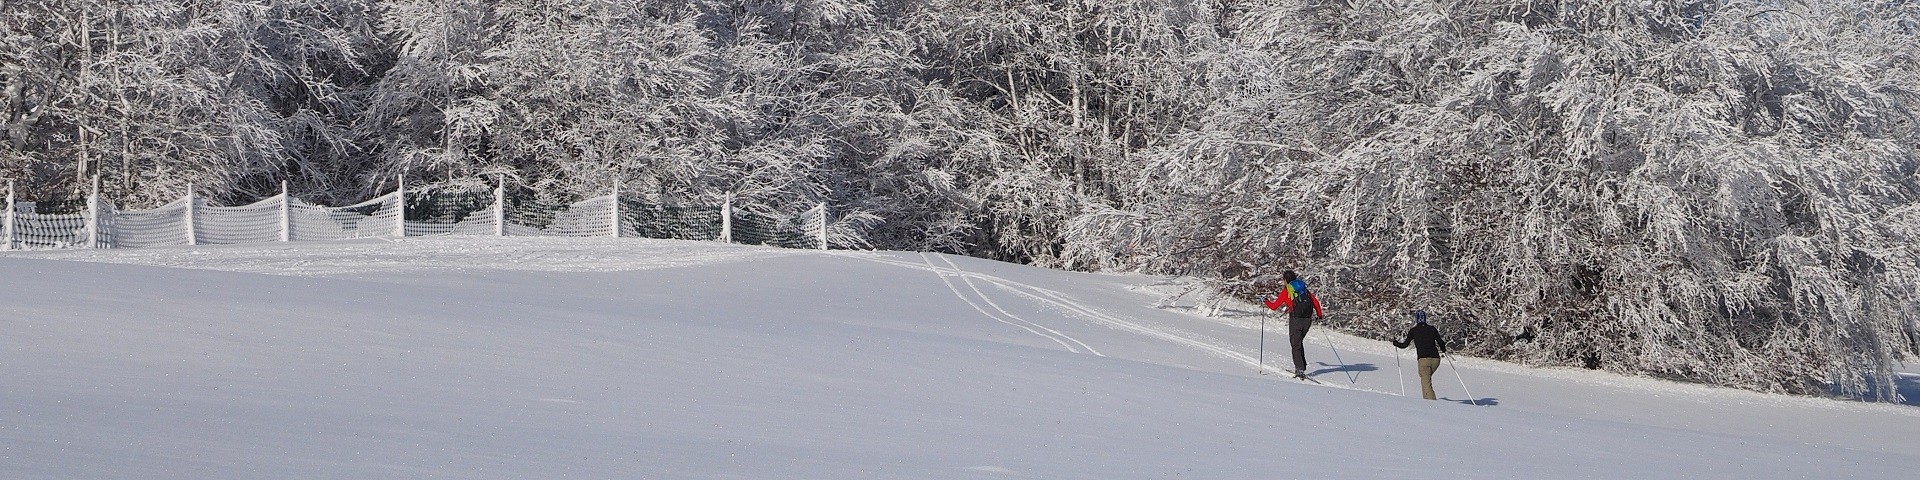 neige209-001-dominique-steinel-jpg-ski-de-fond-2133